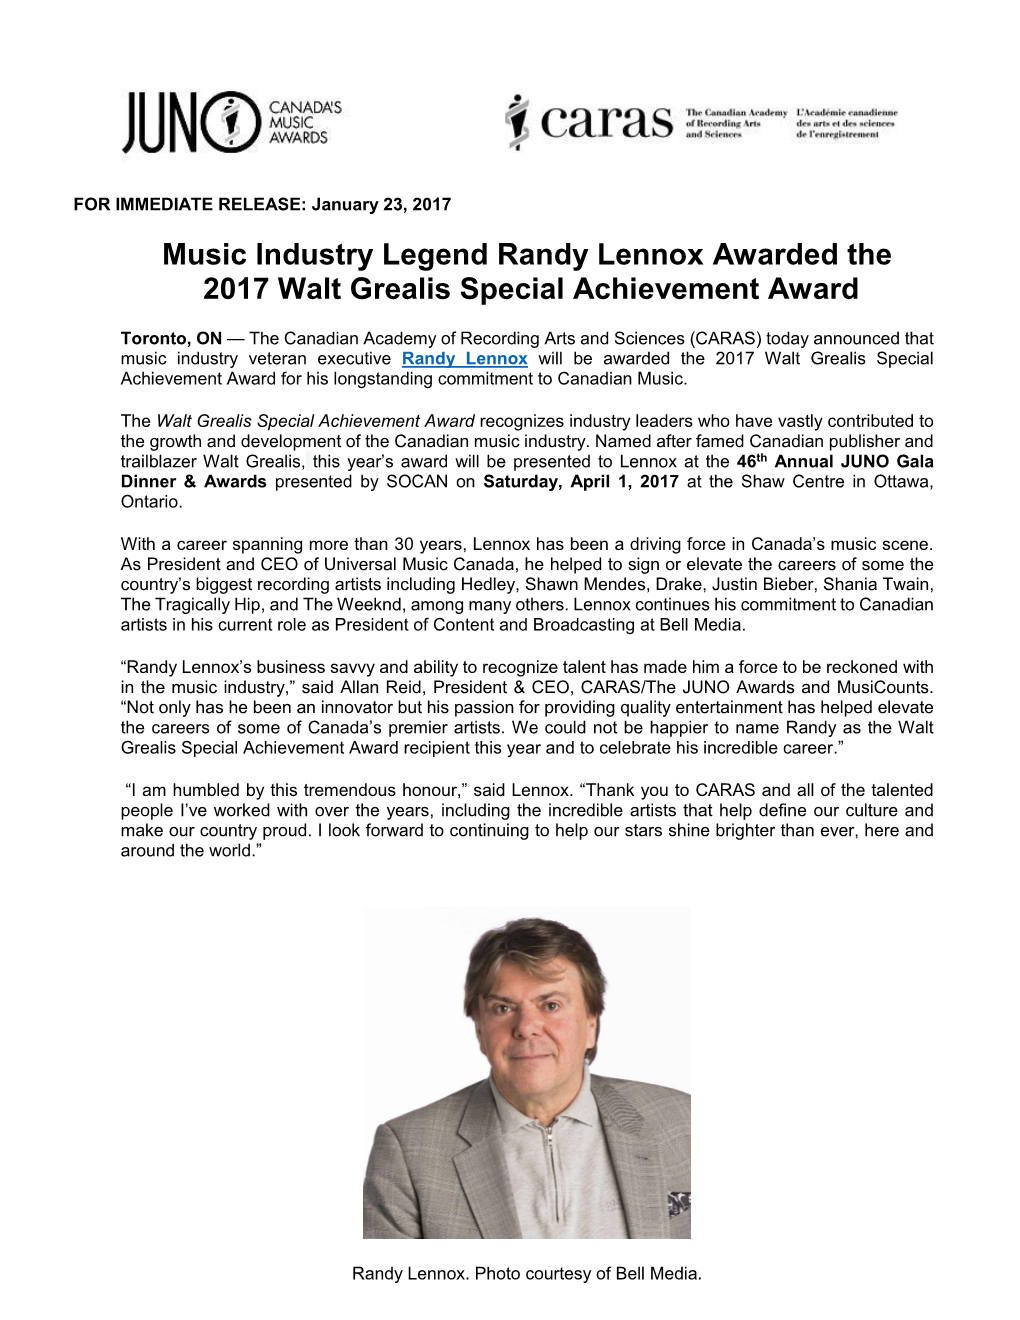 Music Industry Legend Randy Lennox Awarded the 2017 Walt Grealis Special Achievement Award